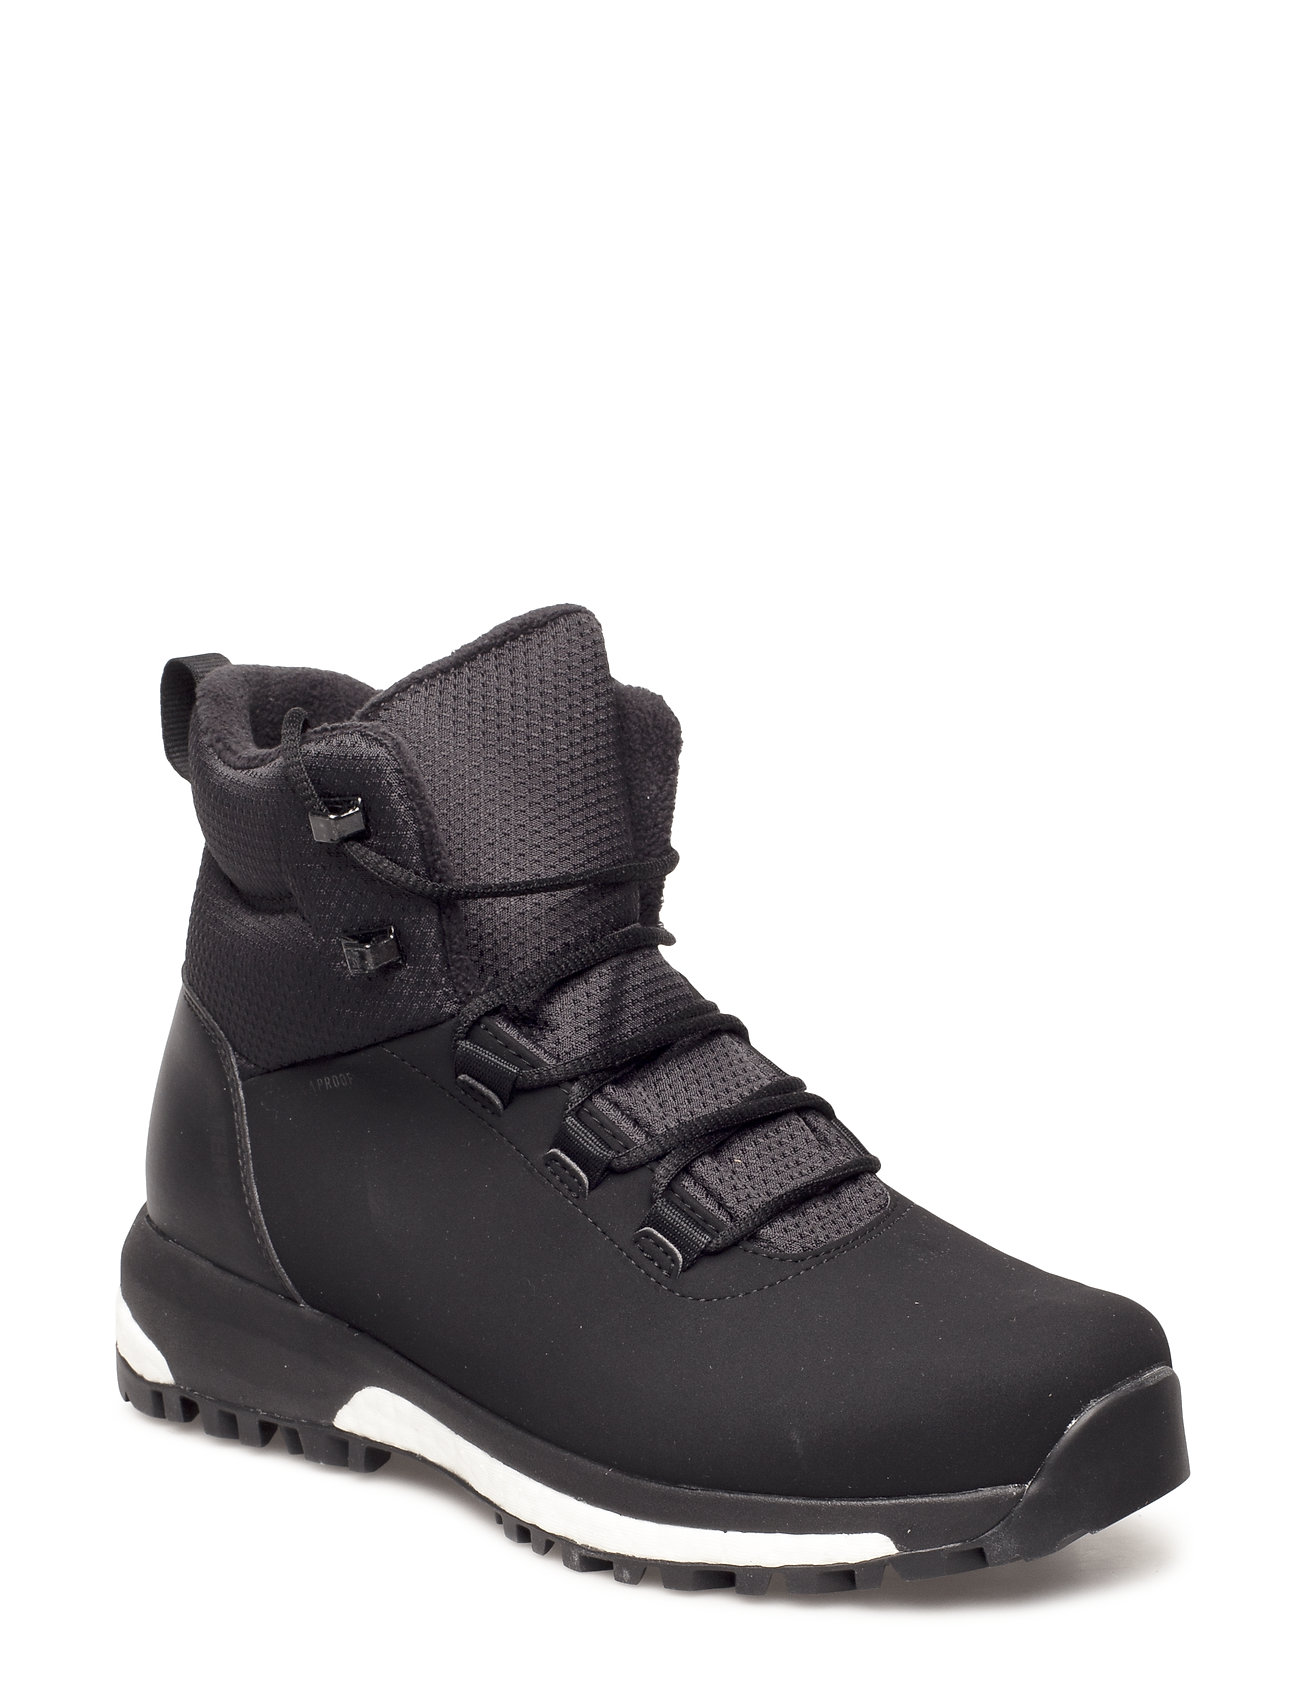 gobierno A merced de Denso adidas Performance Terrex Pathmaker Cw W - Hiking/walking shoes | Boozt.com